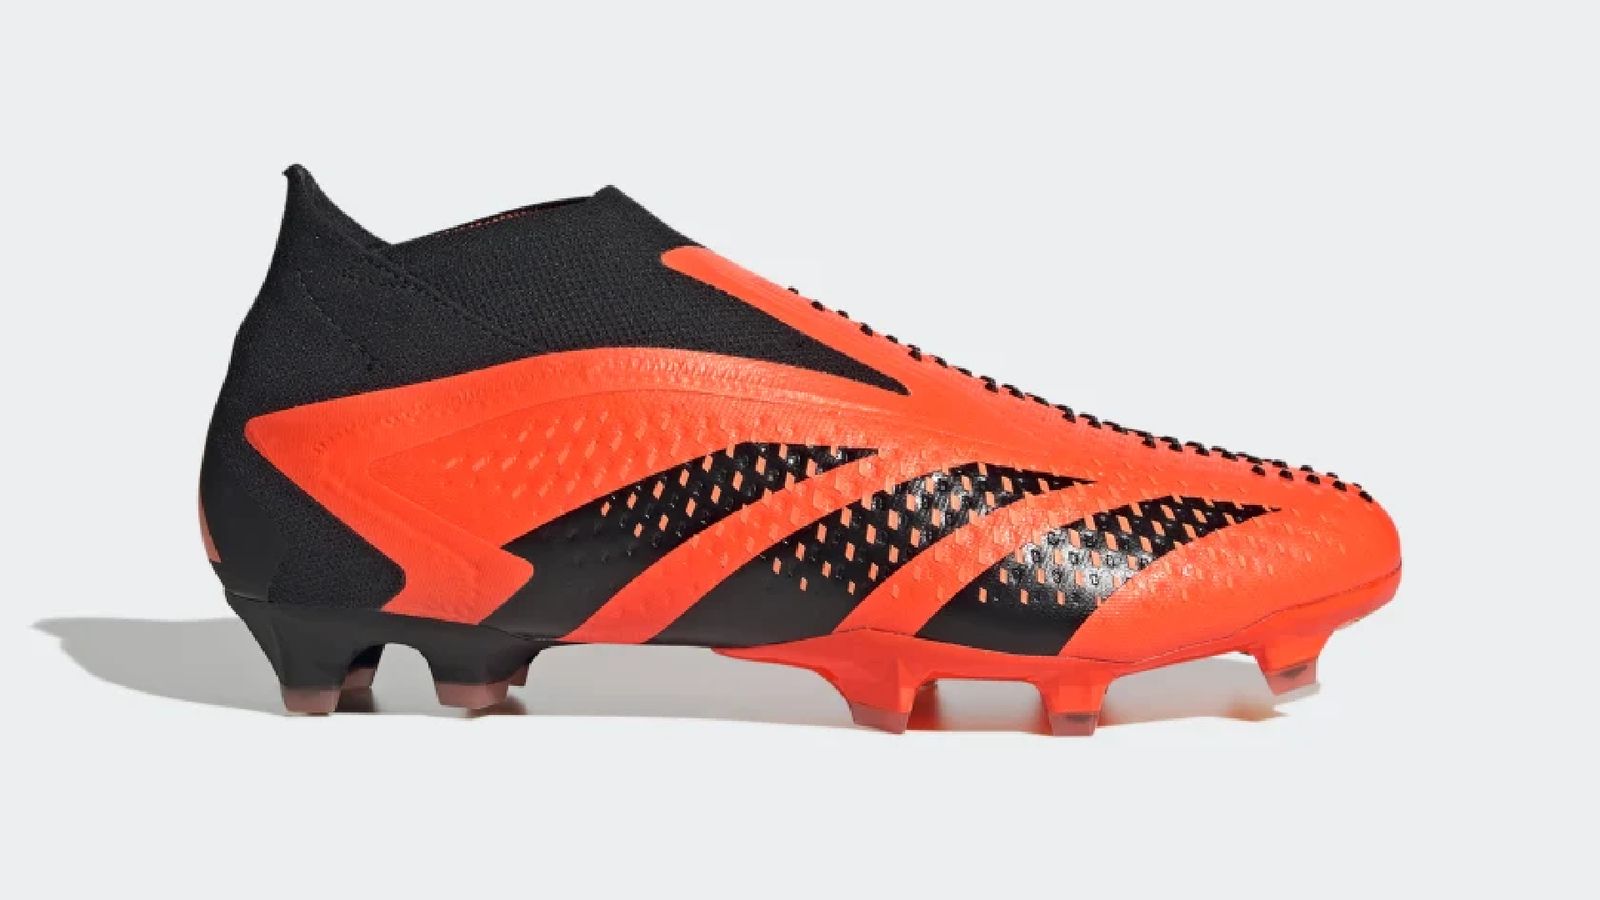 adidas Predator Accuracy+ product image of an orange and black football boot.